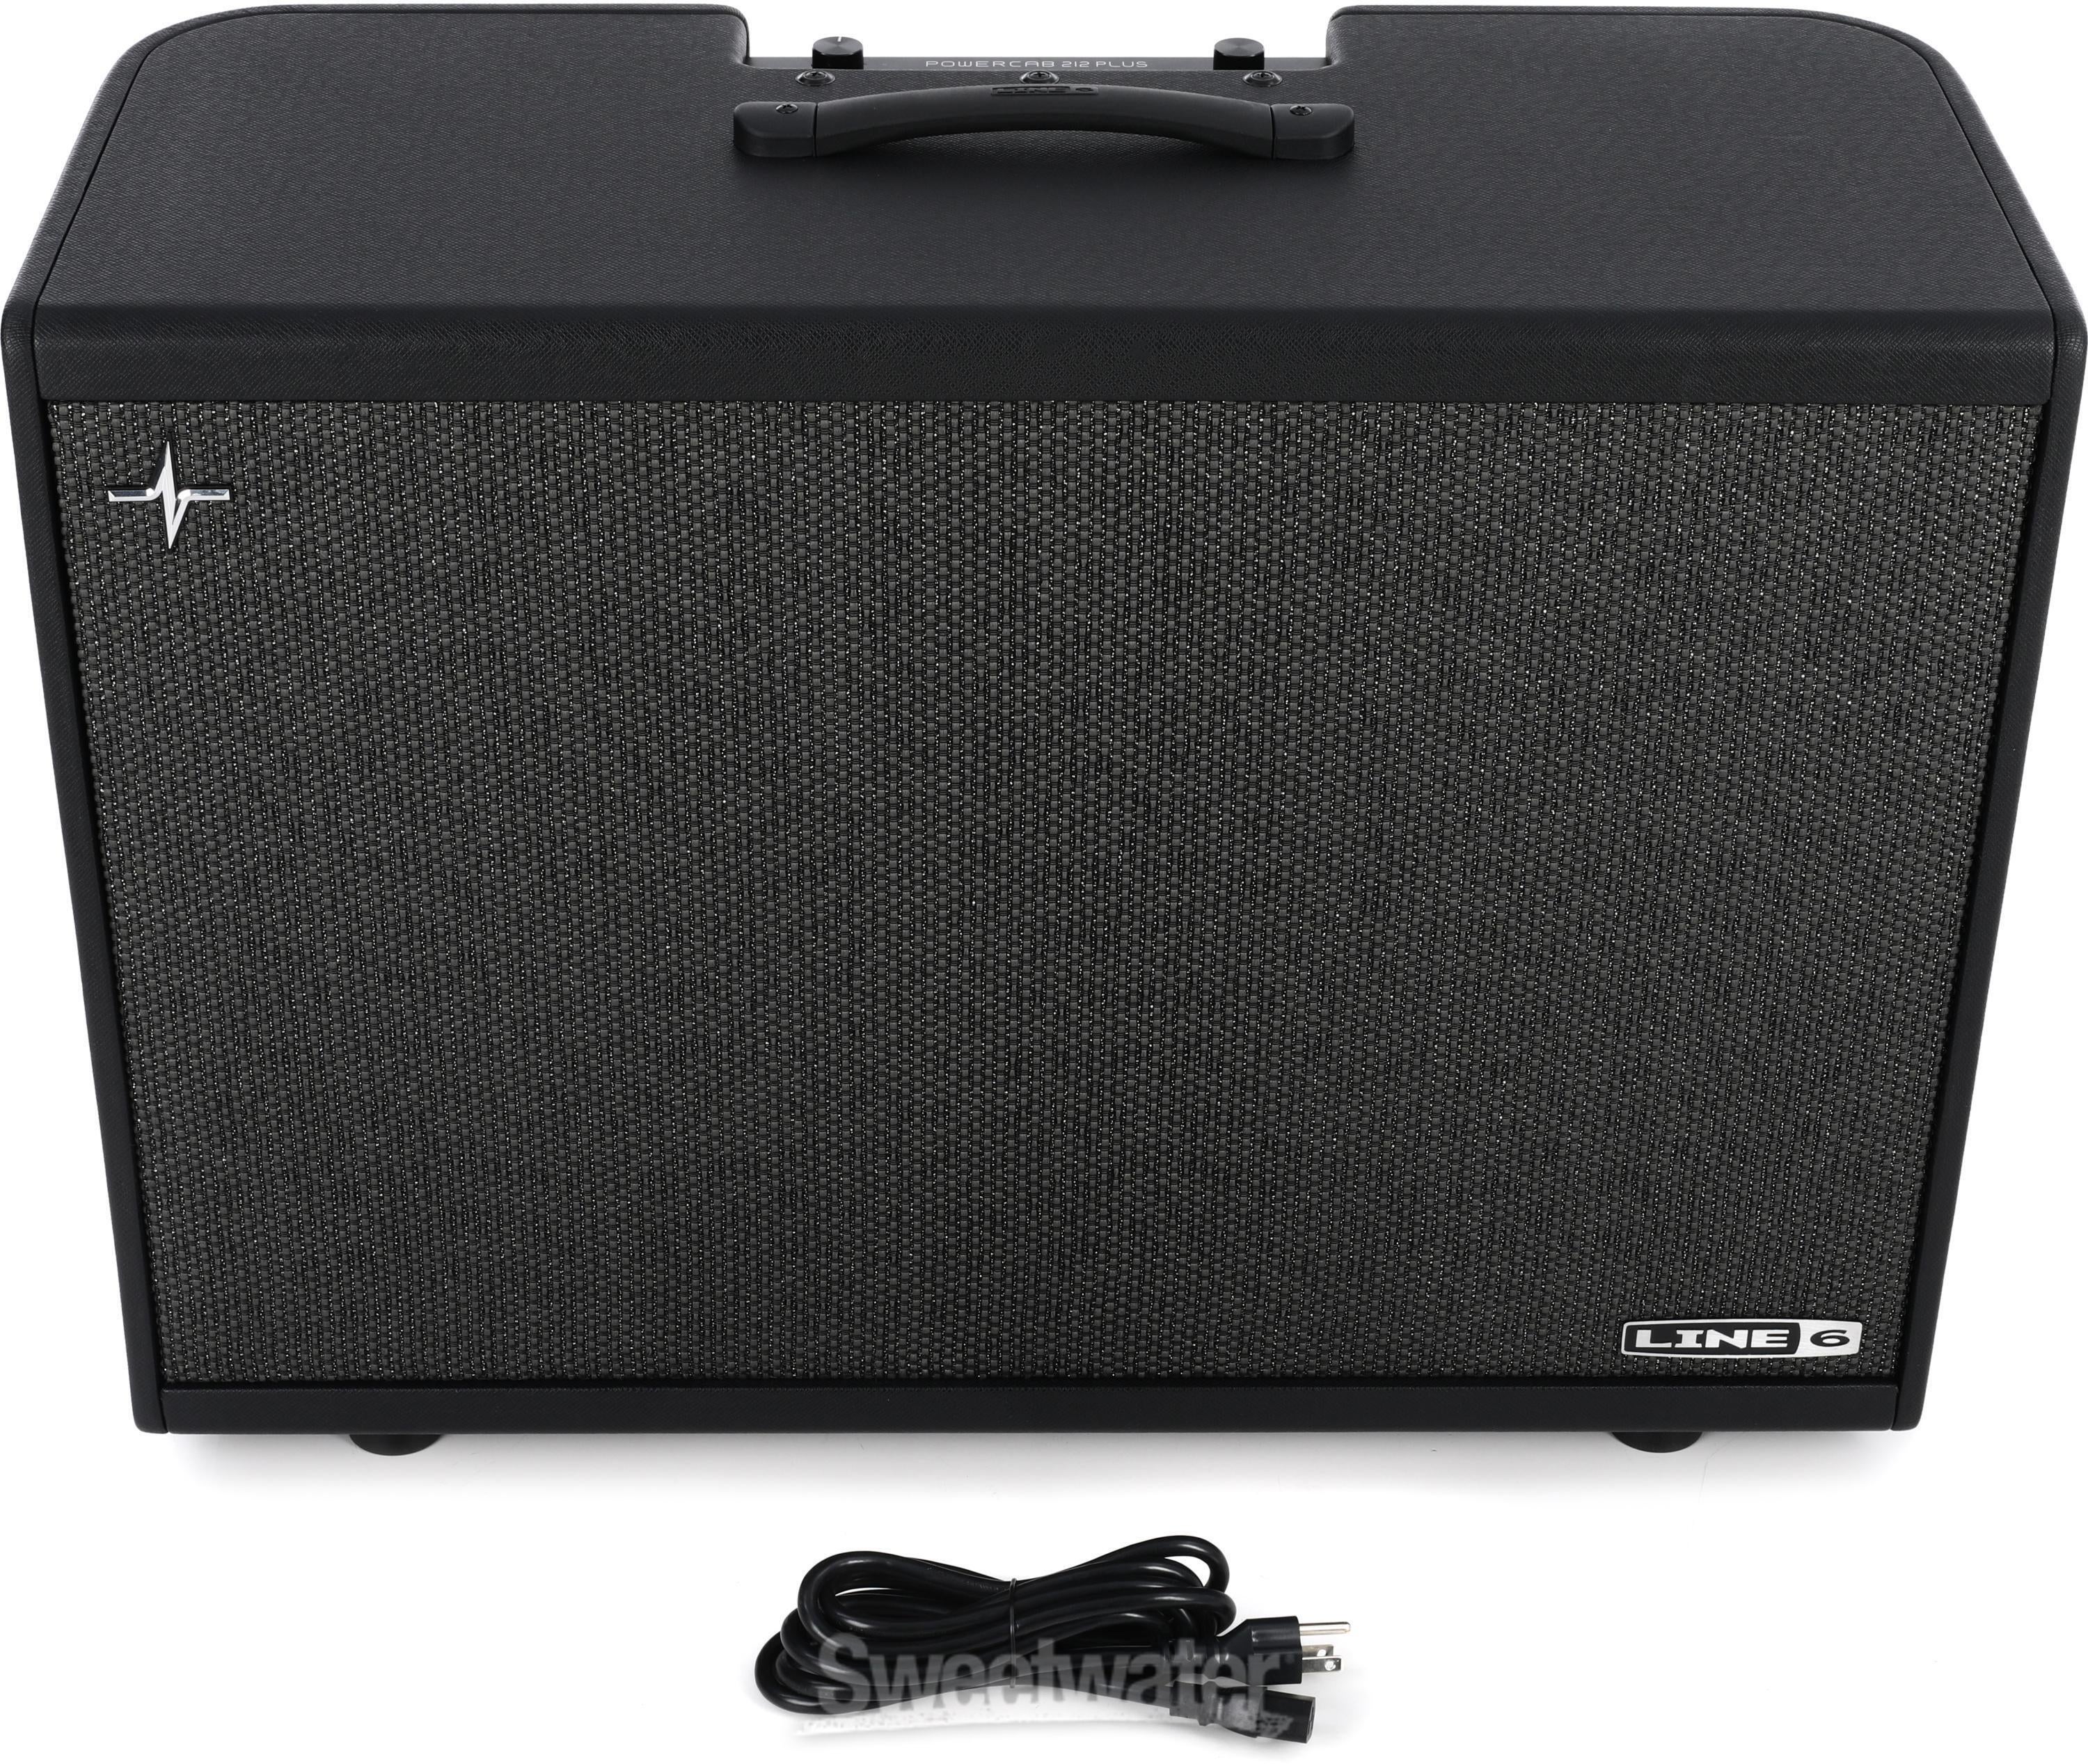 Line 6 Powercab 212 Plus Active Guitar Speaker | Sweetwater